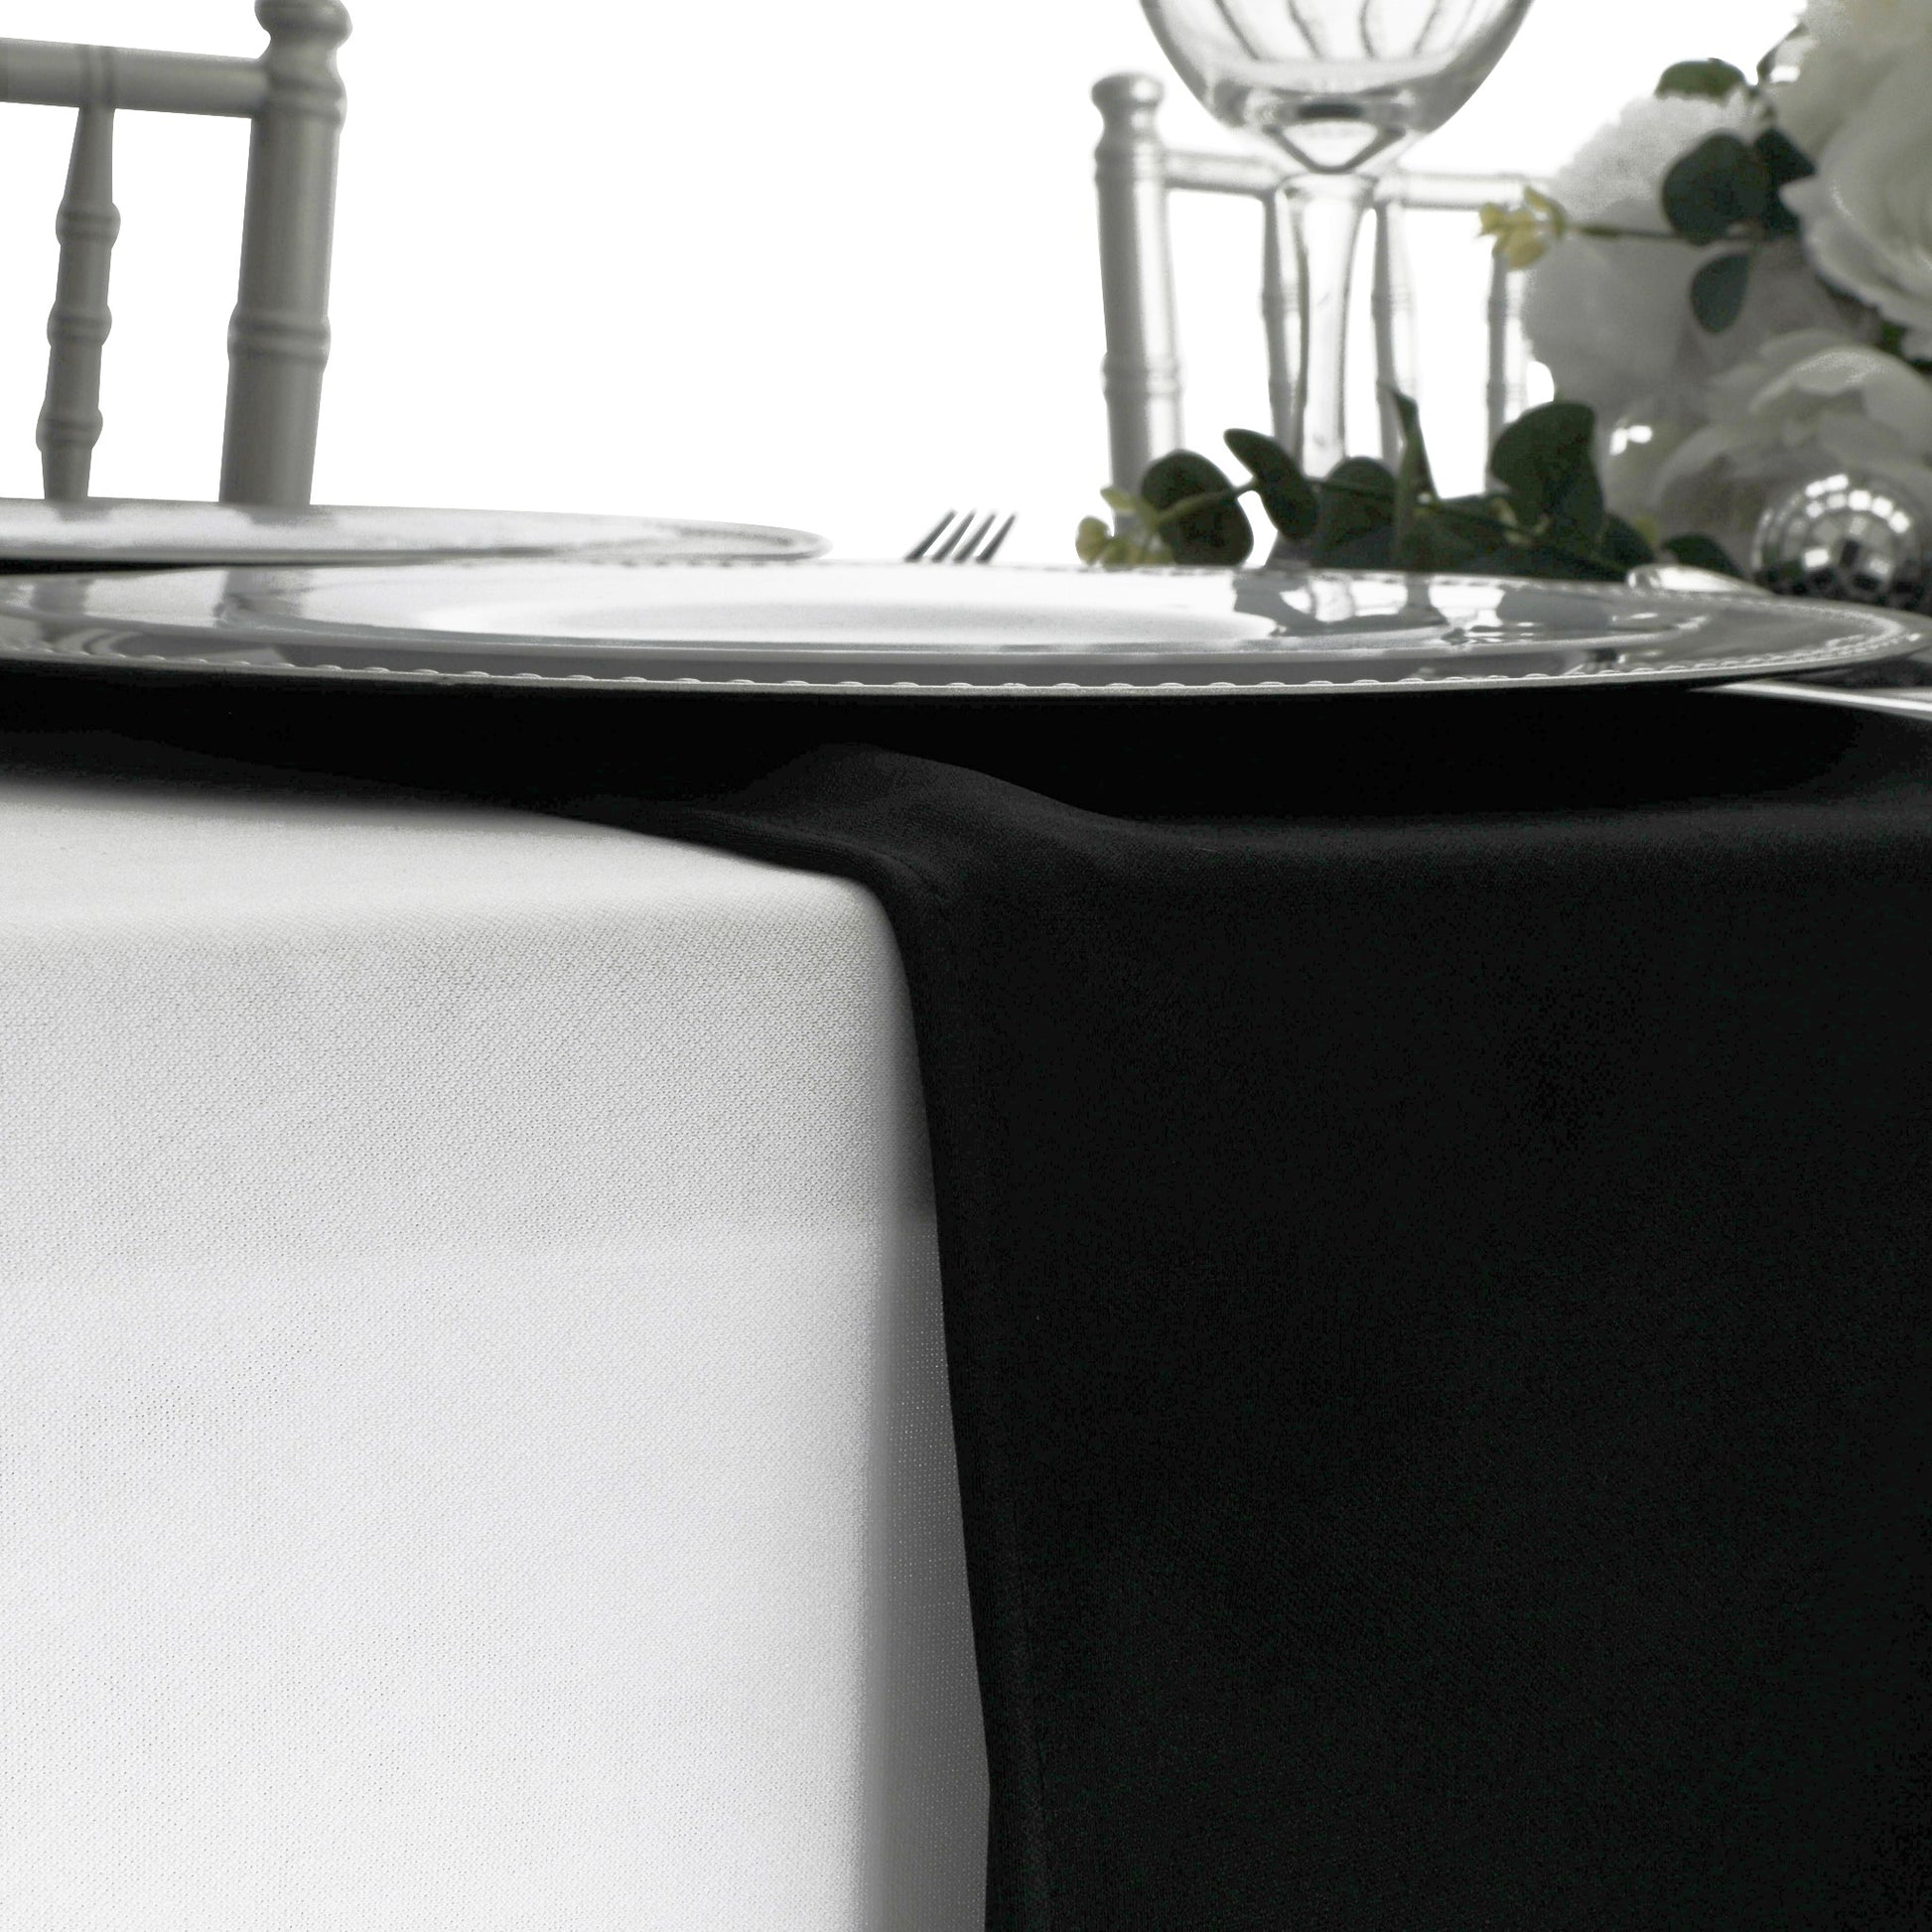 Scuba (Wrinkle-Free) Table Napkin in Black